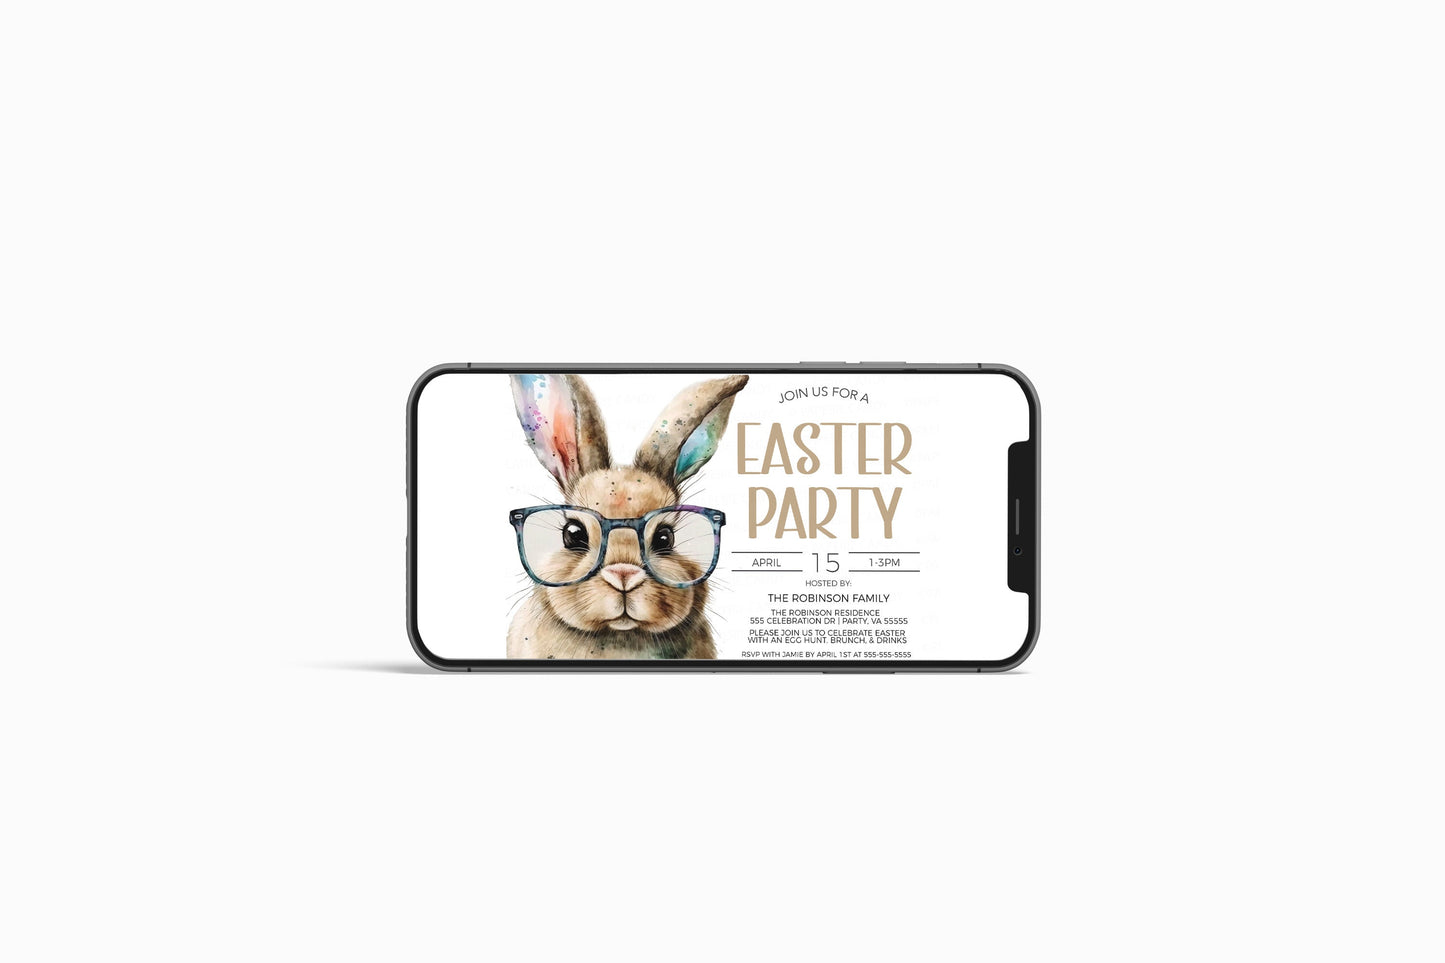 Easter Party Invitation, Easter Egg Hunt Invite, Kids Easter Party, Easter Breakfast Brunch Lunch Dinner Party, Editable Printable Template